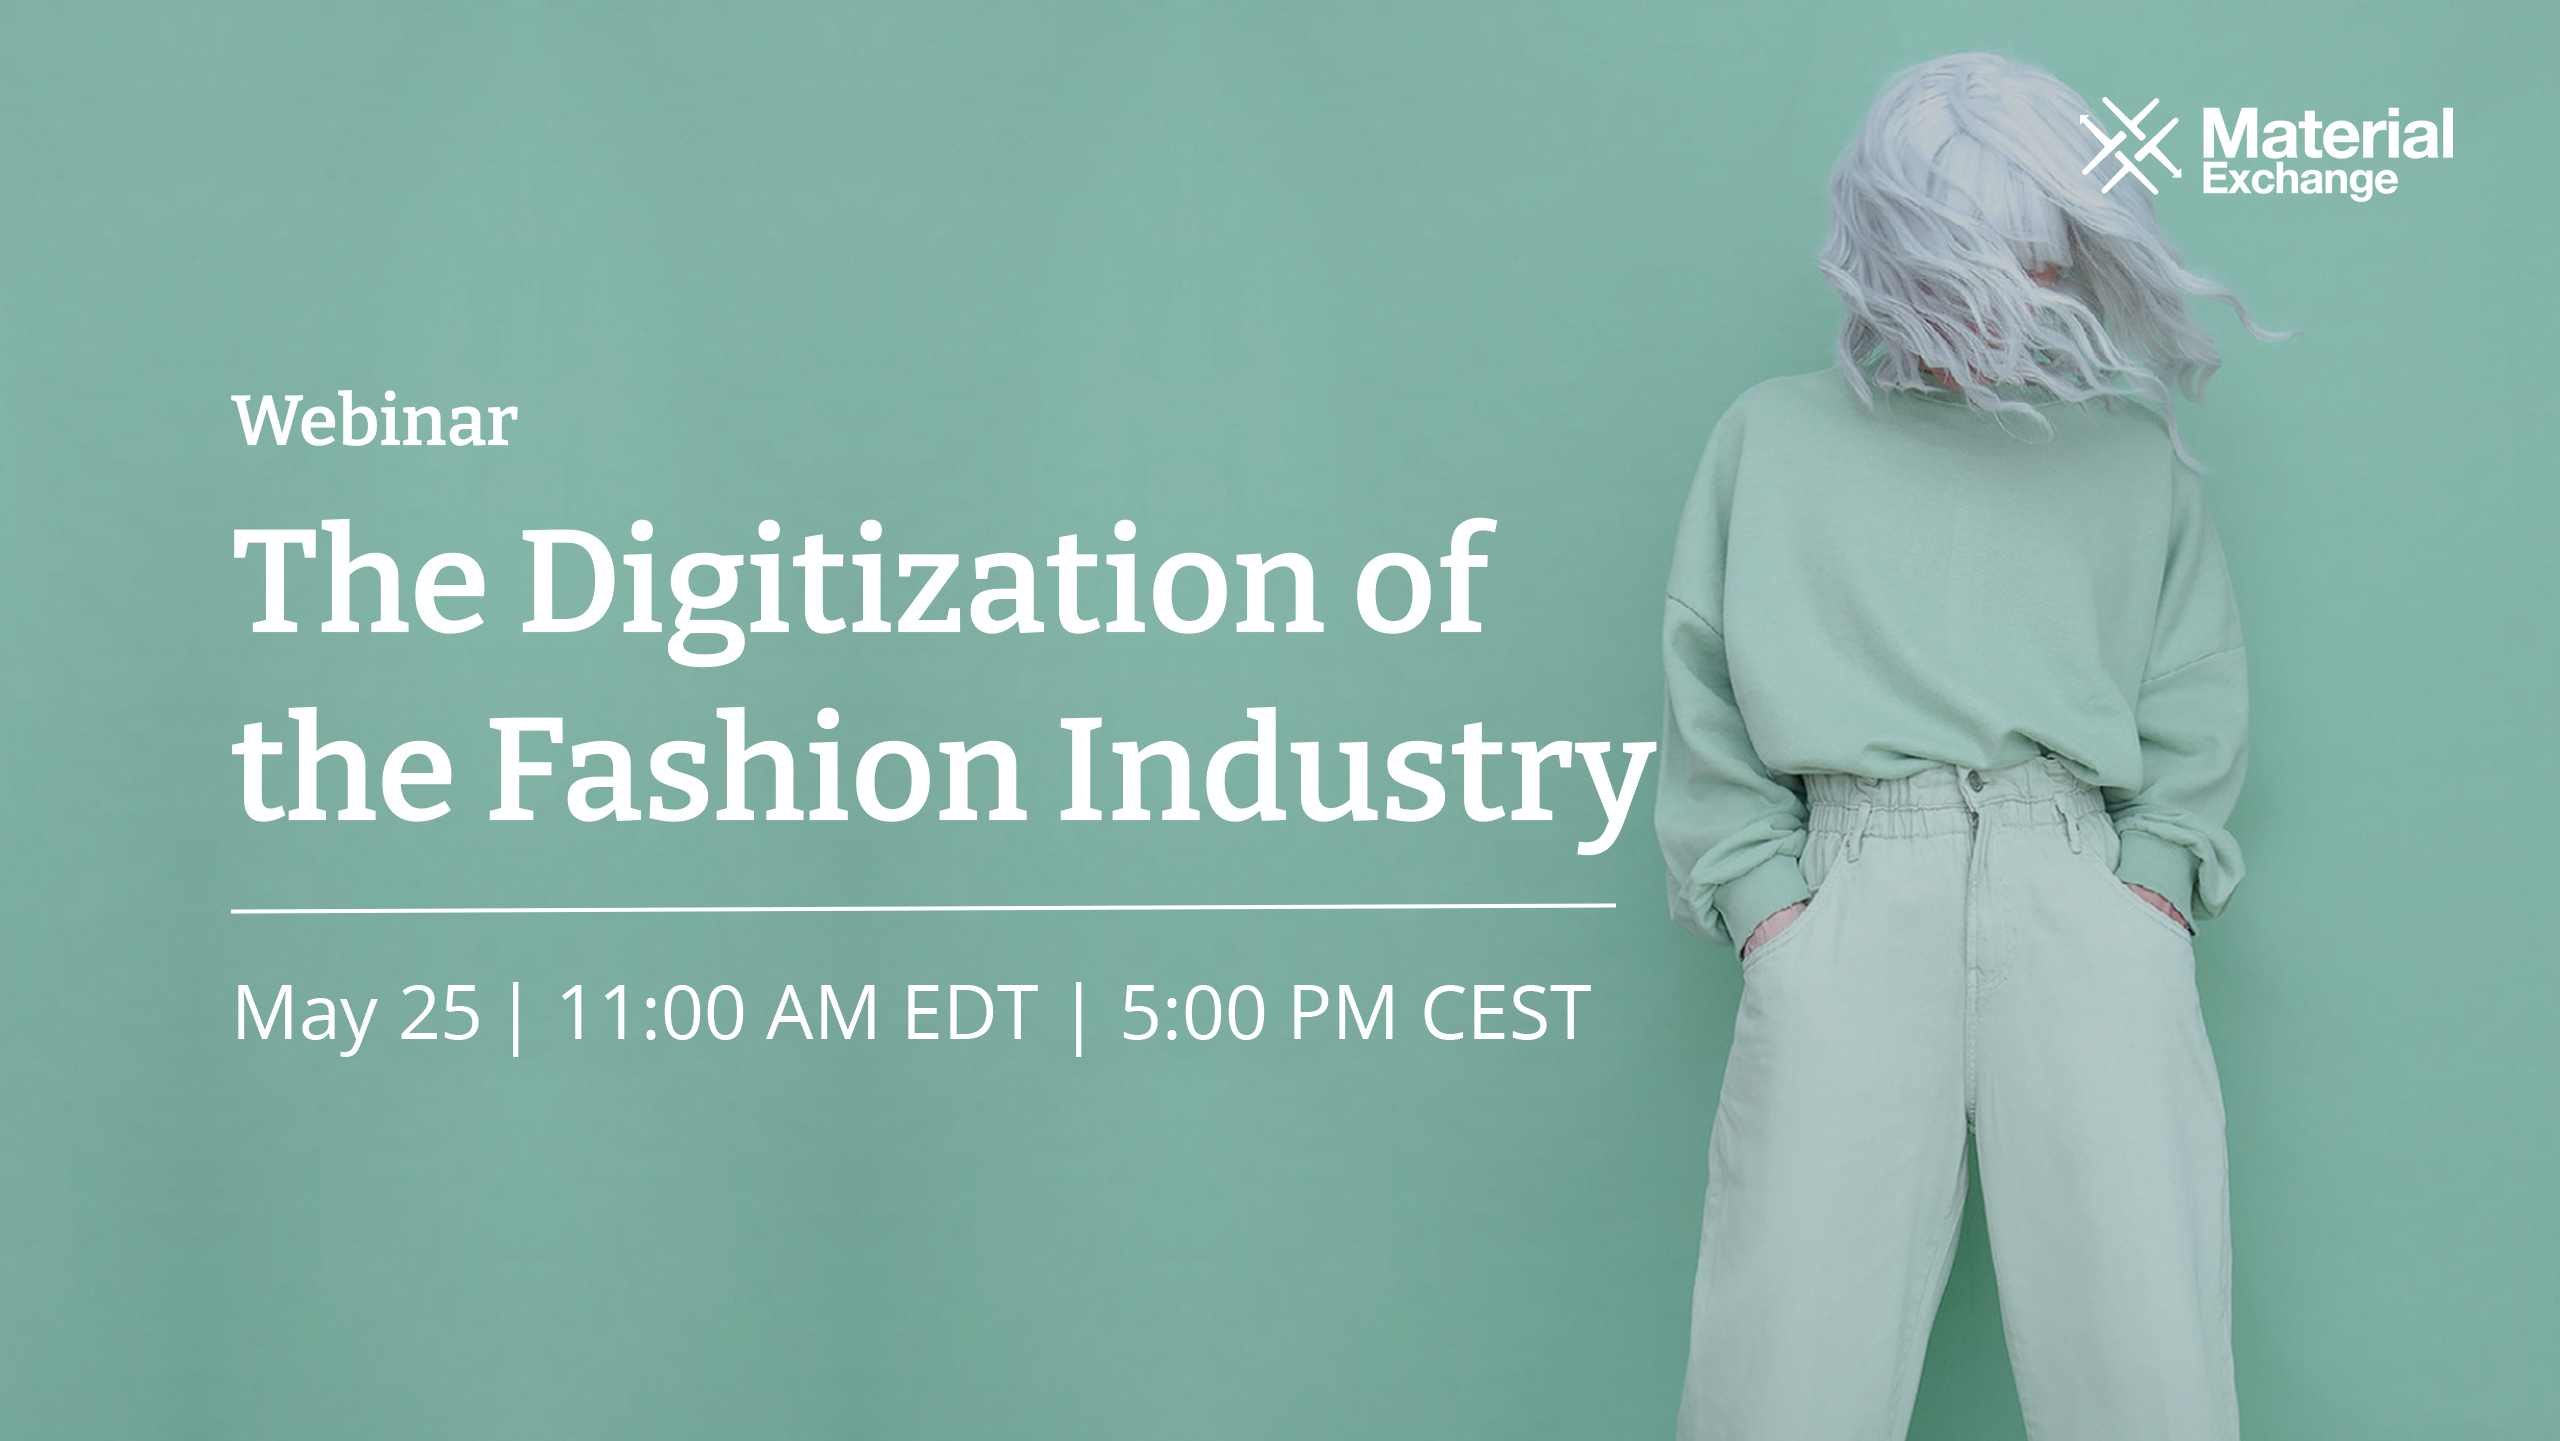 The Digitization of the Fashion Industry webinar